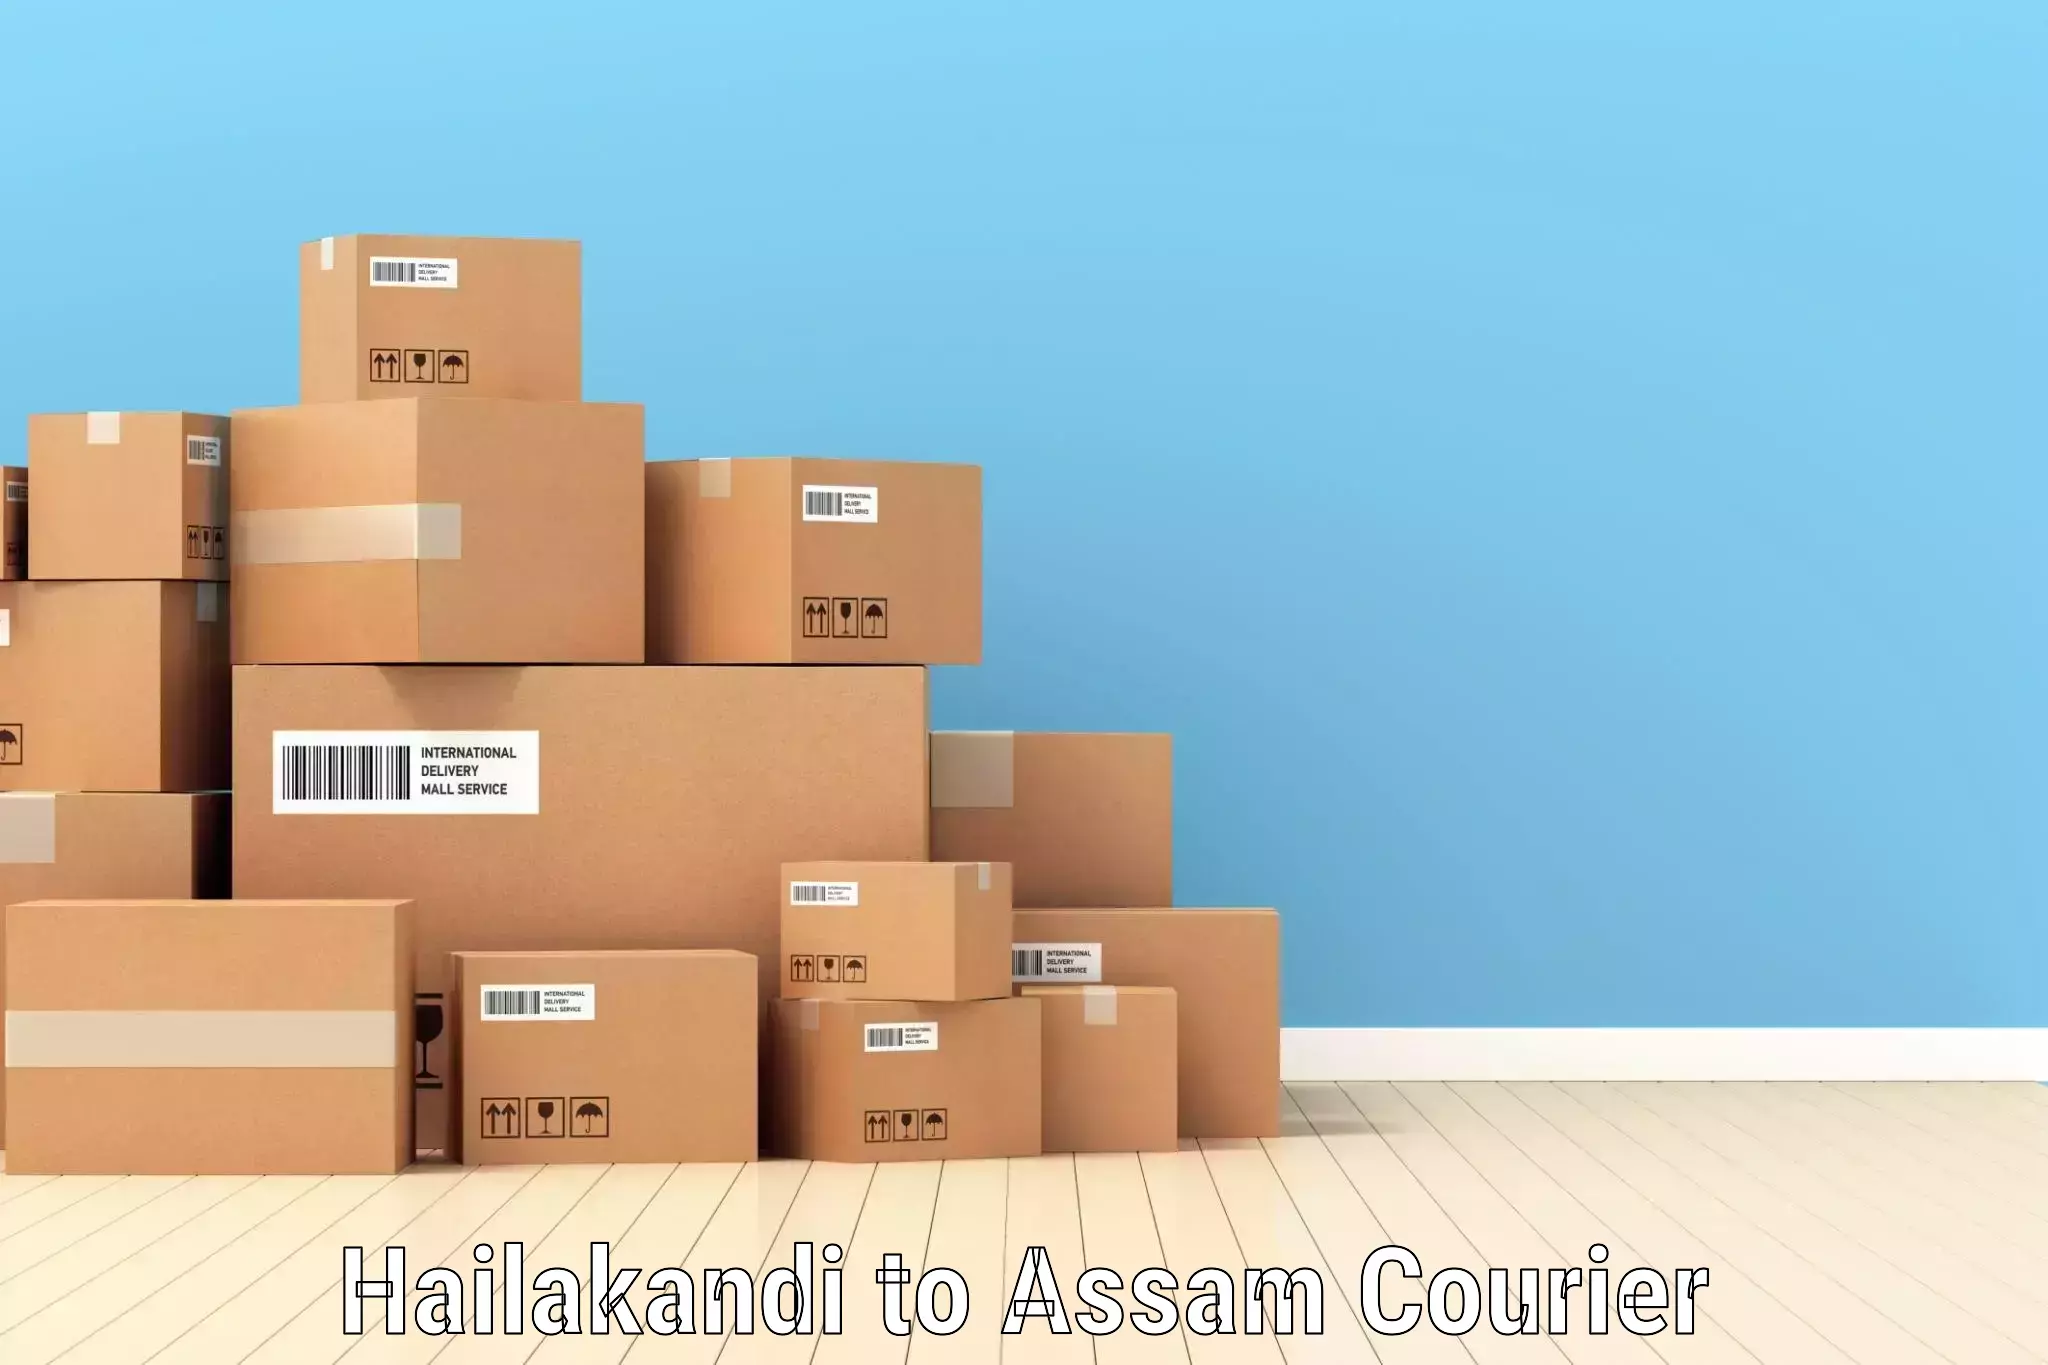 State-of-the-art courier technology Hailakandi to Lumding